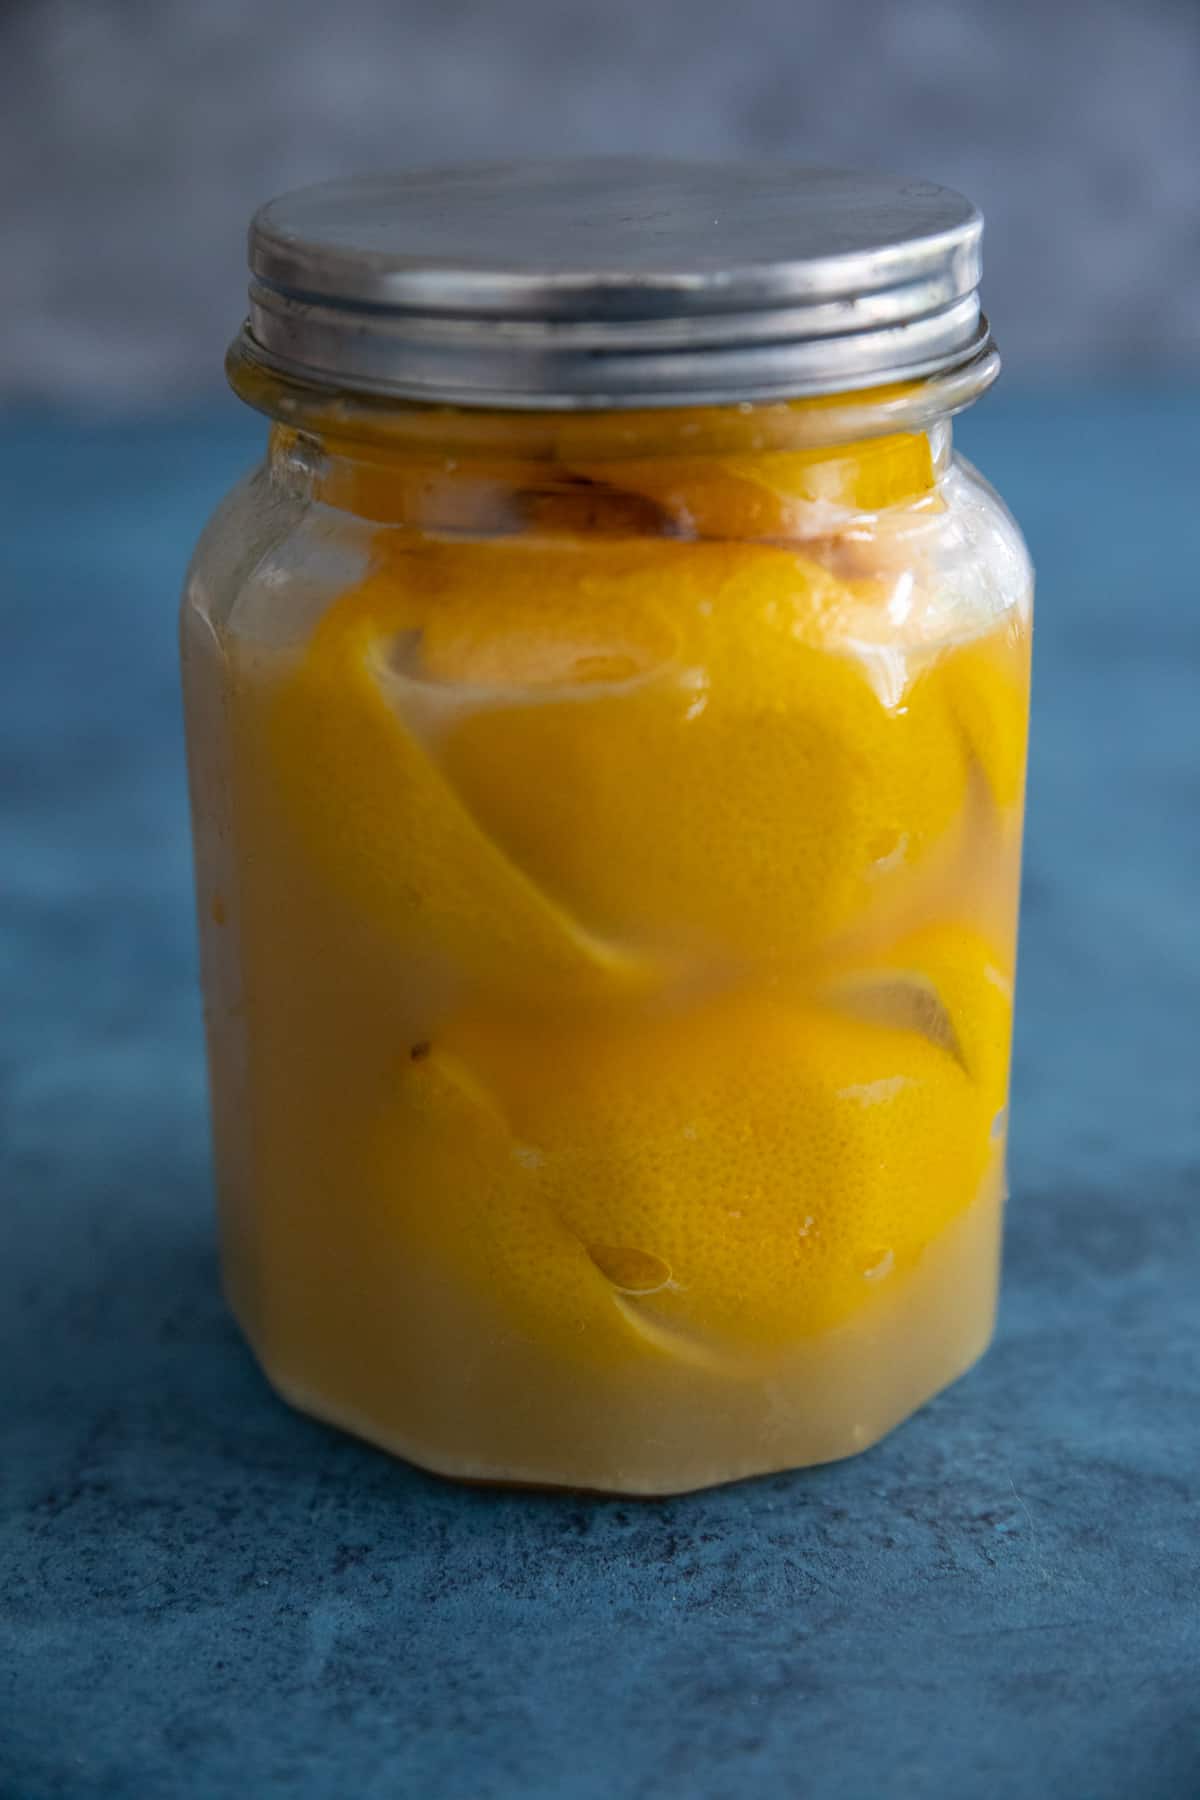 pickled lemons in a jar.